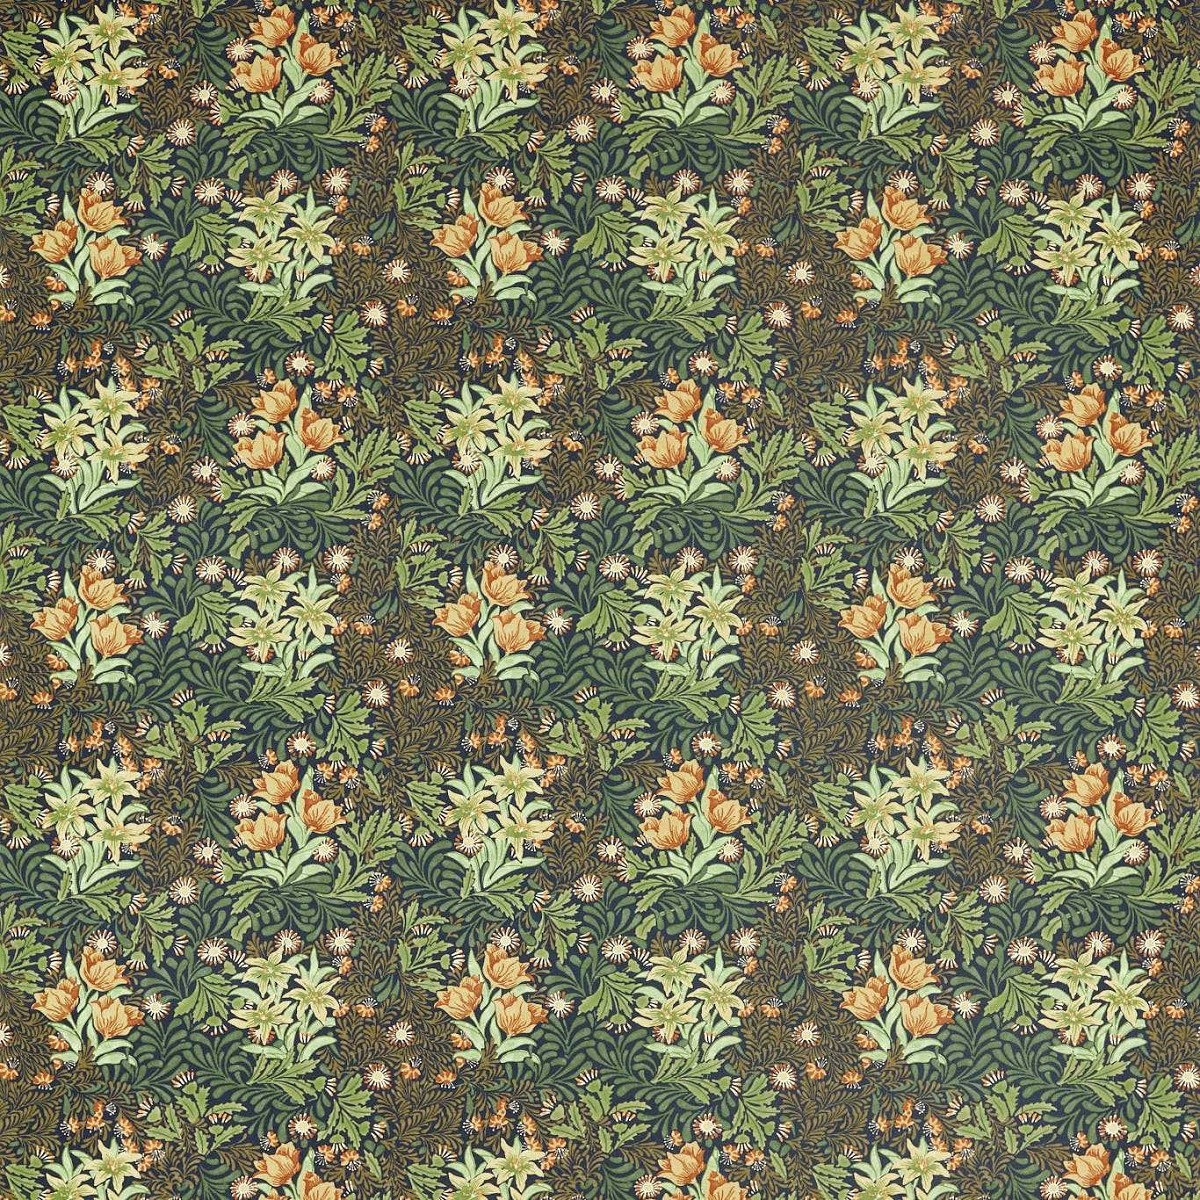 Bower Indigo Fabric by William Morris & Co.